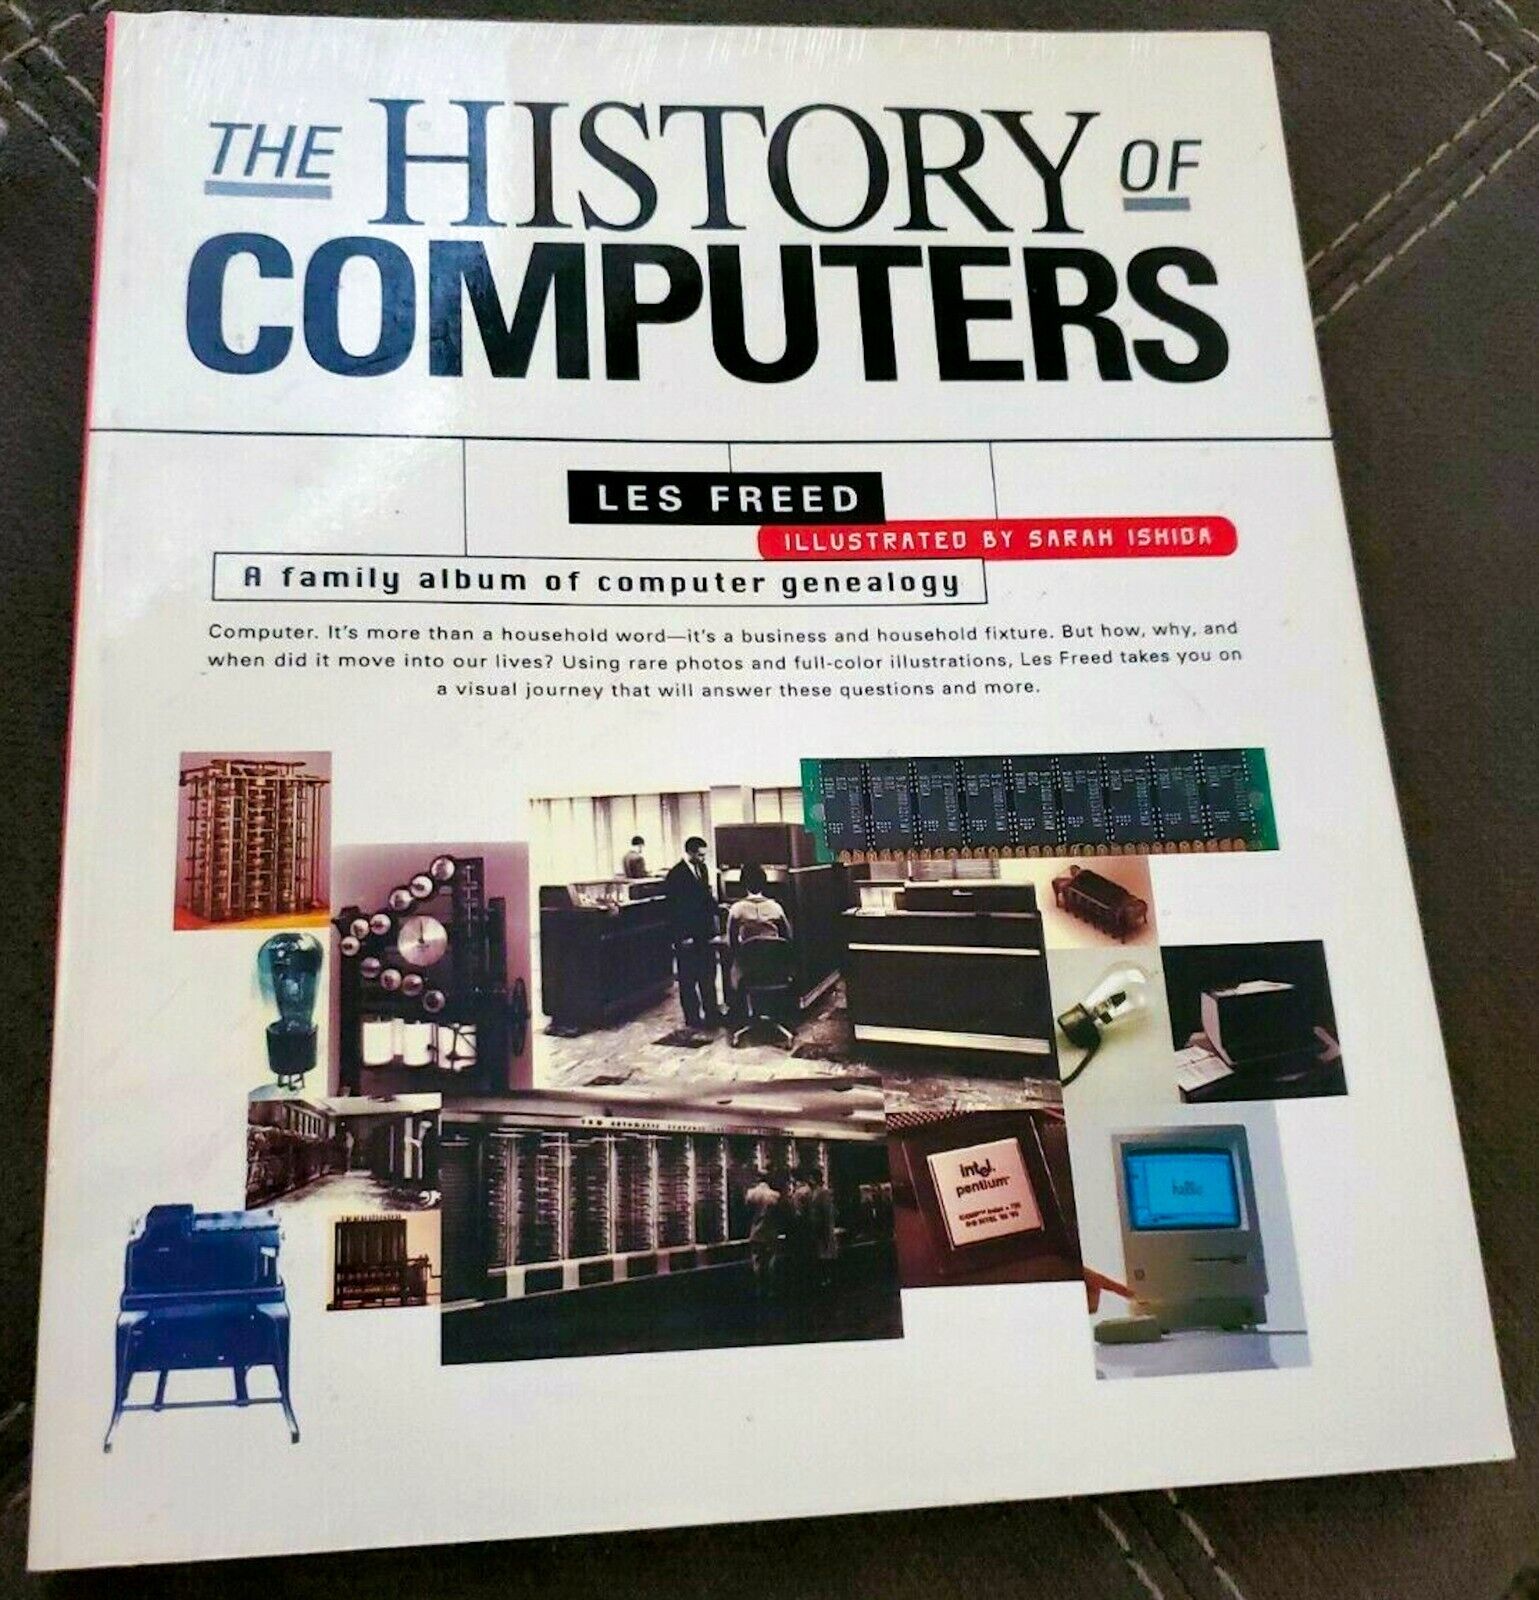 UNIVAC IBM 701 650 Apple 1, II Apple Lisa DEC PDP-8 Altair 8800 Computer History